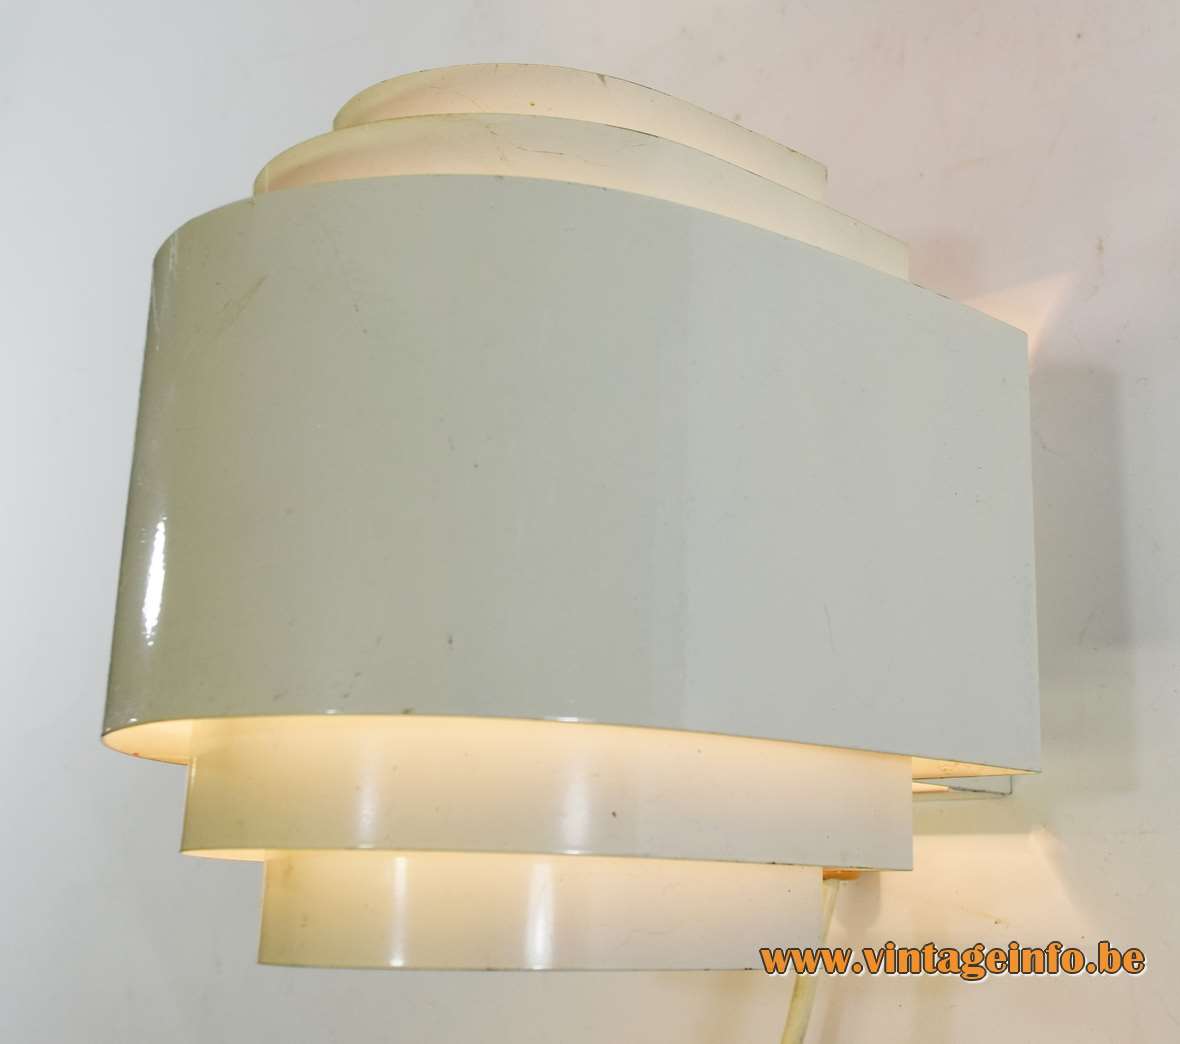 ANVIA wall lamp design: Jan Hoogervorst white painted curved metal slats lampshade 1960s E27 lamp socket